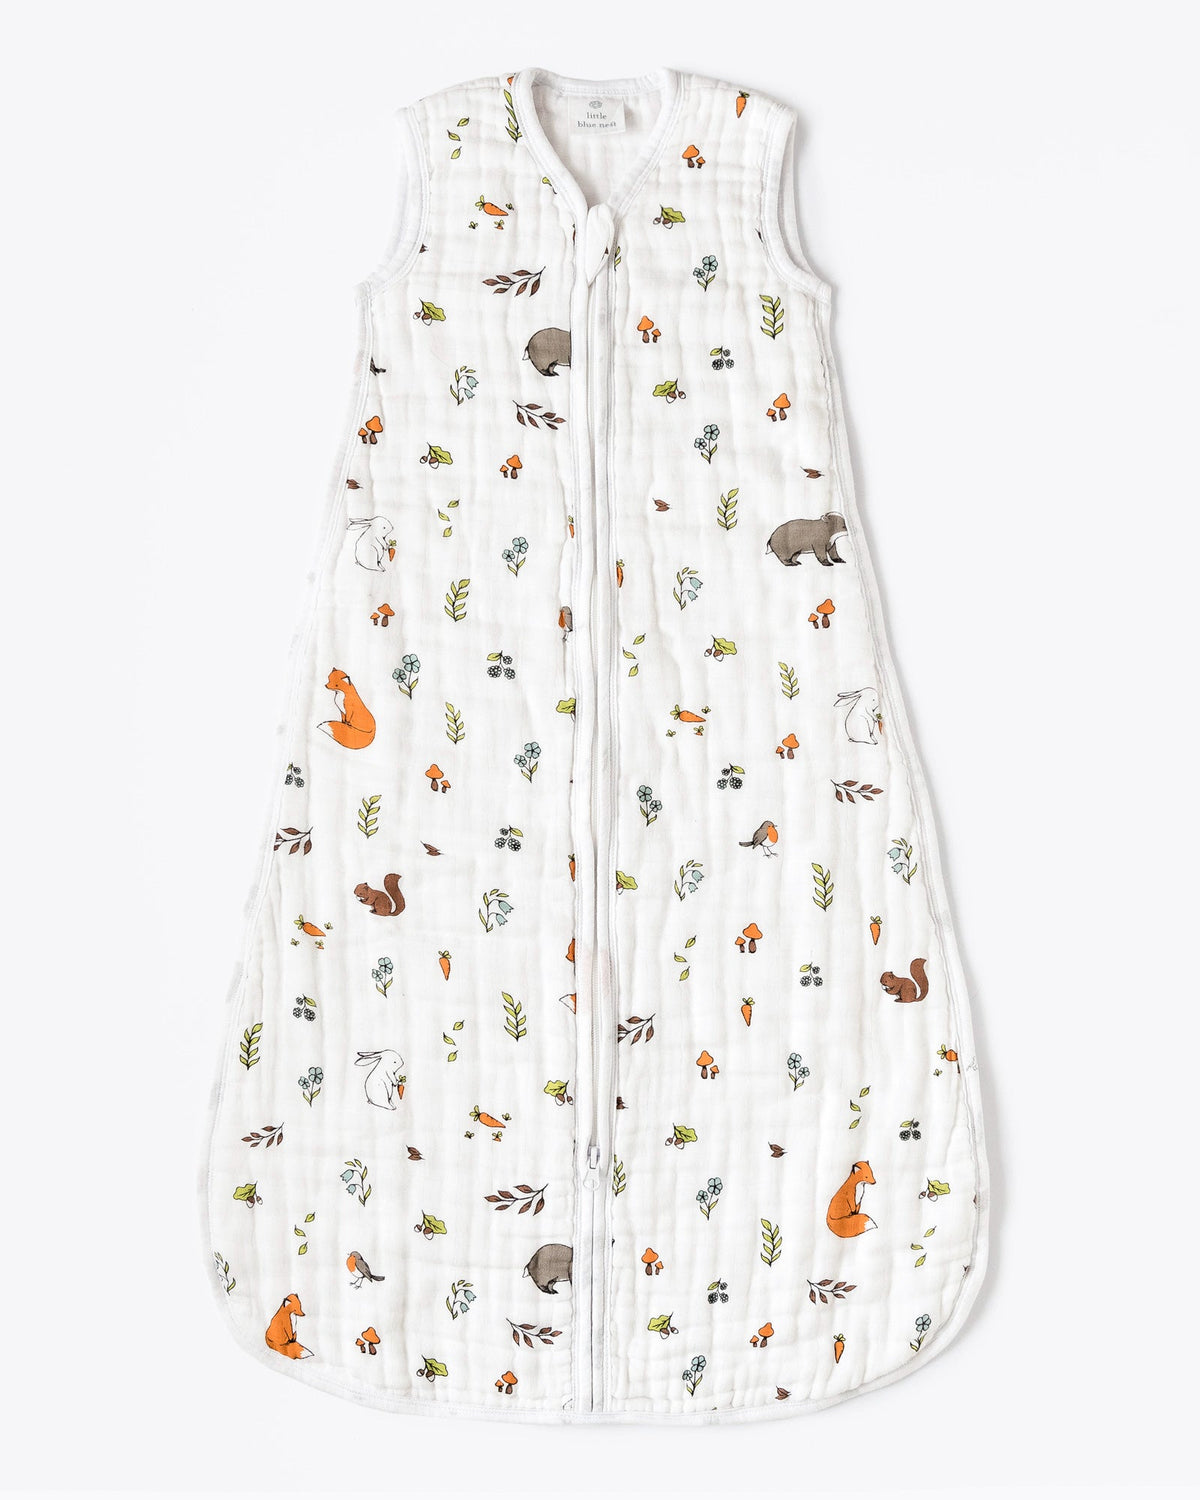 Organic cotton muslin baby sleeping bag 1.5 tog with woodland pattern